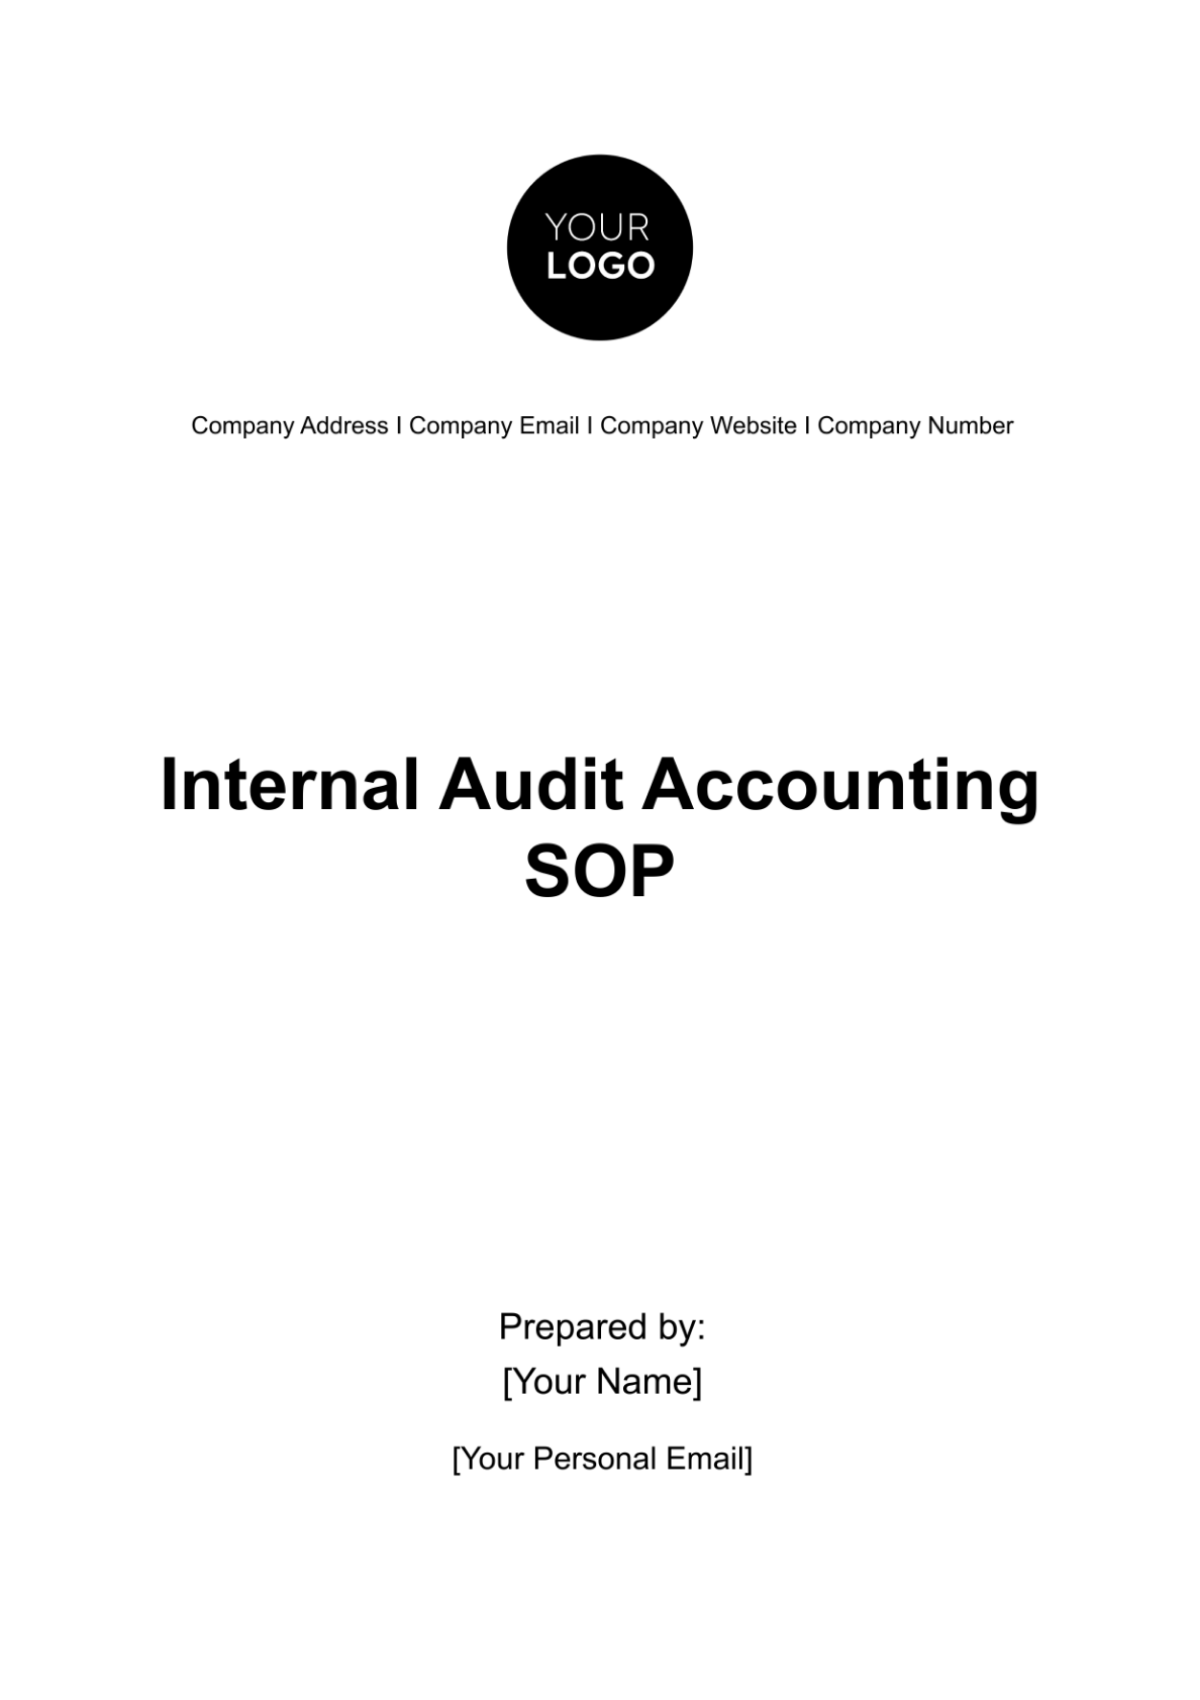 Internal Audit Accounting SOP Template